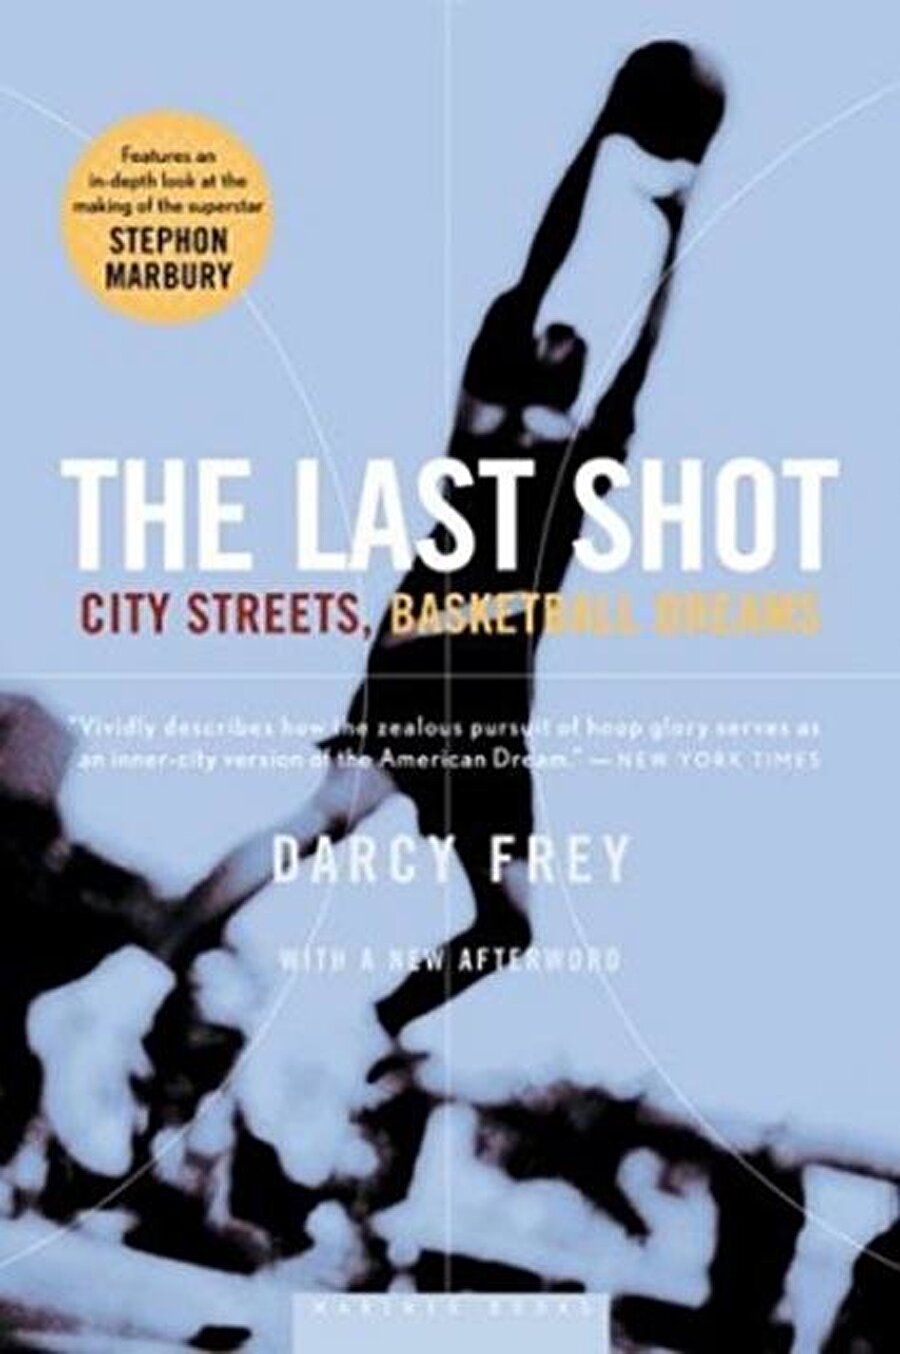 THE LAST SHOT: CITY STREETS, BASKETBALL DREAMS: Darcy Frey
